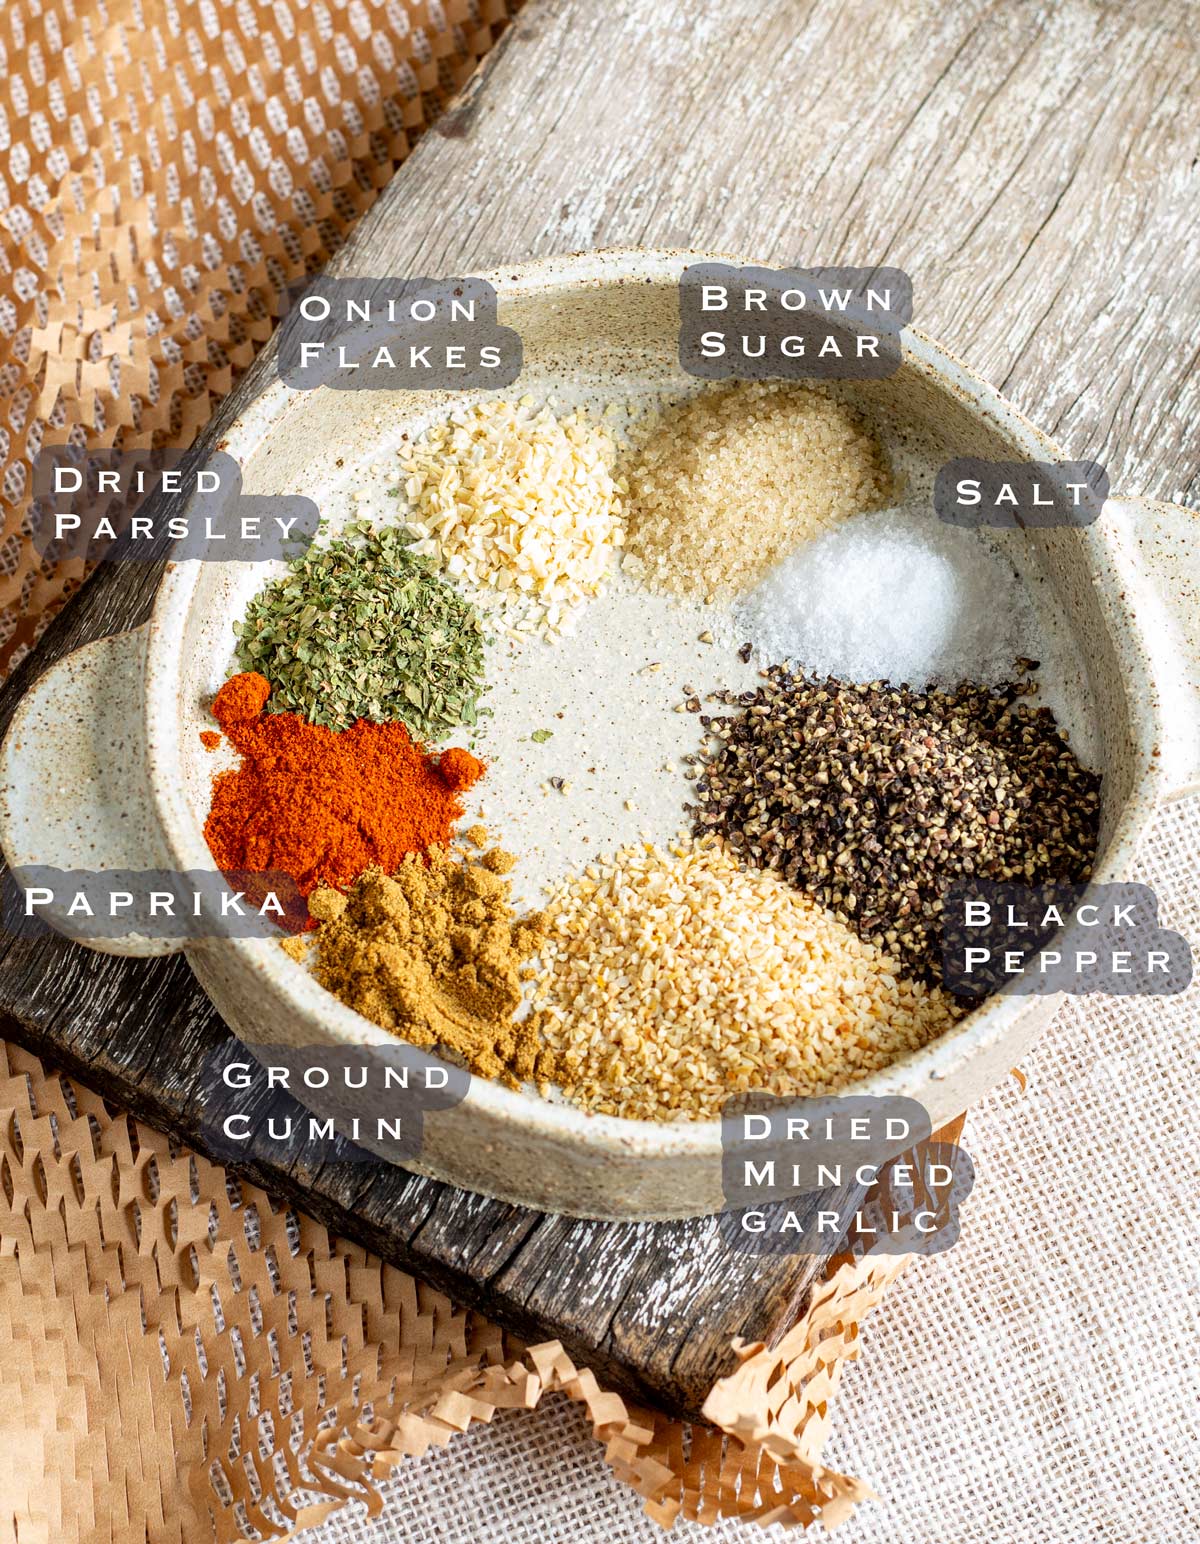 ingredients for homemade garlic pepper seasoning in a rustic bowl